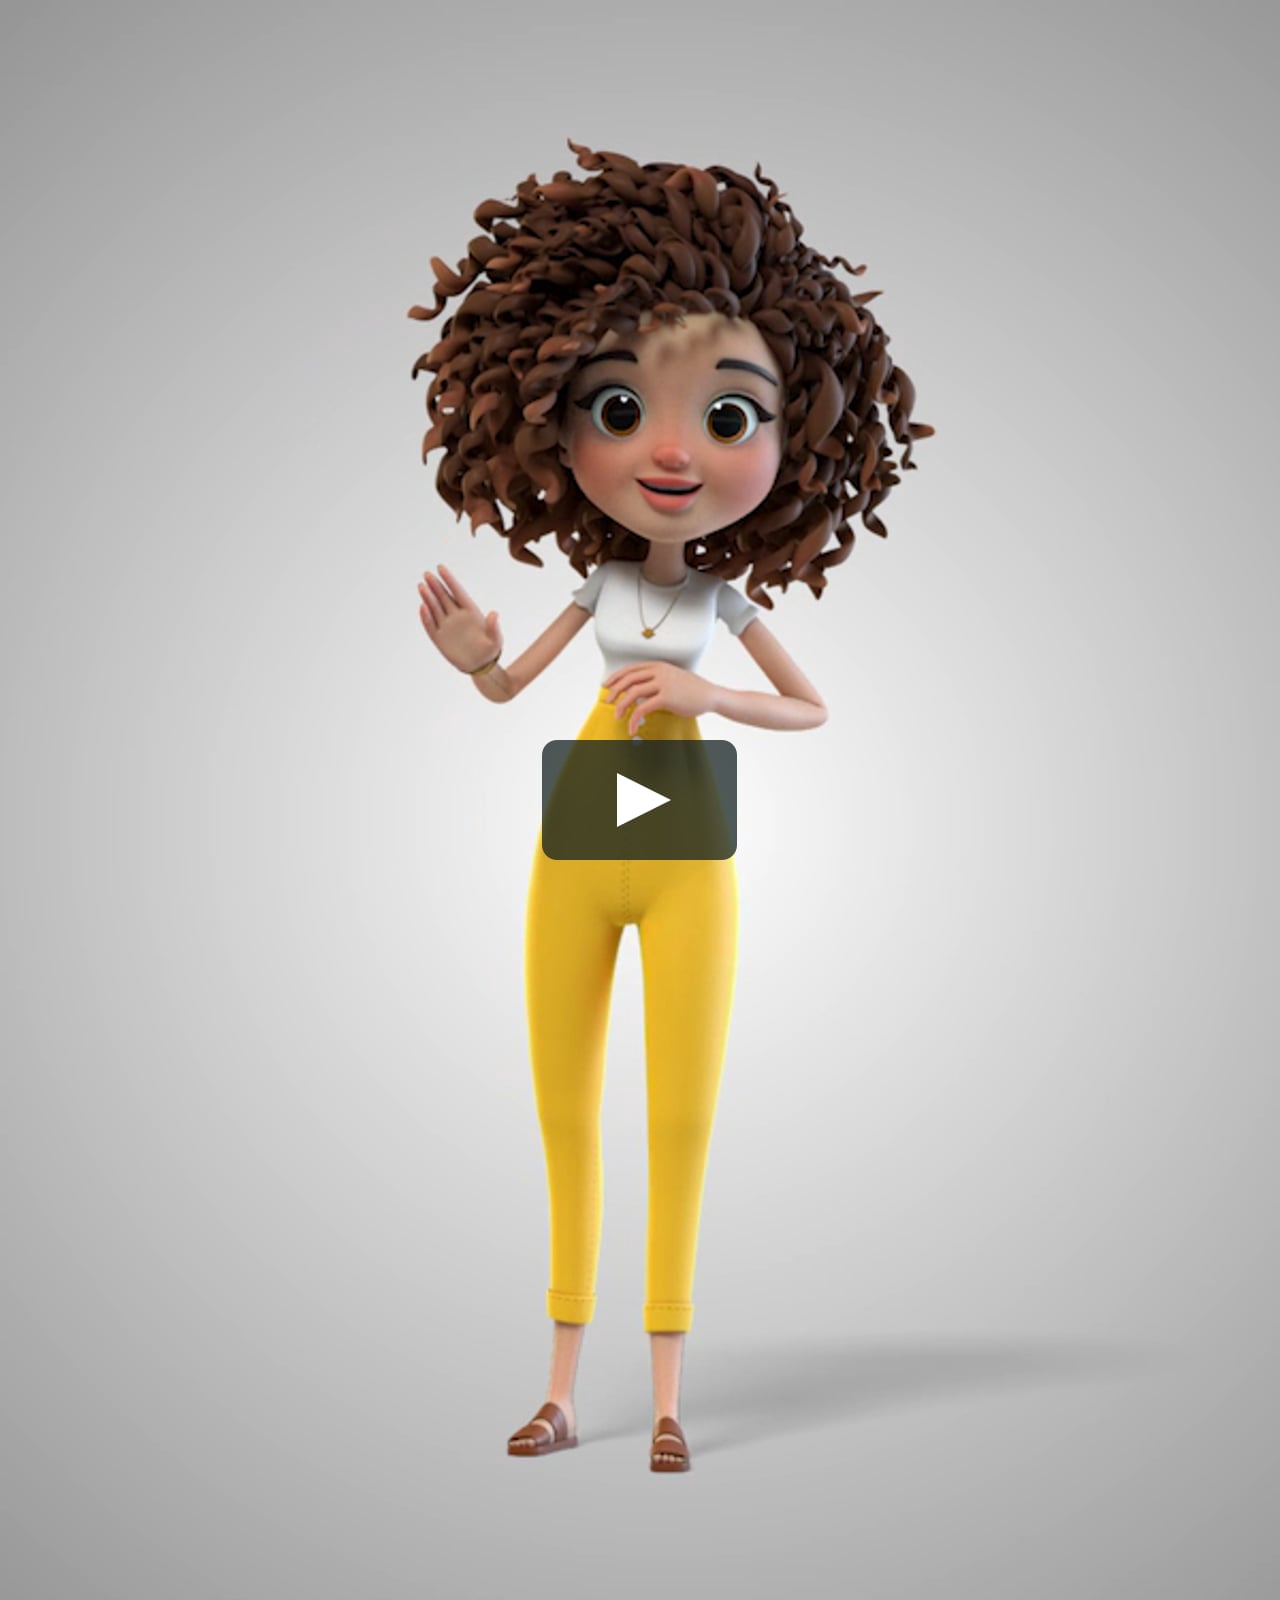 3d Character Animation - Mascoteria on Vimeo